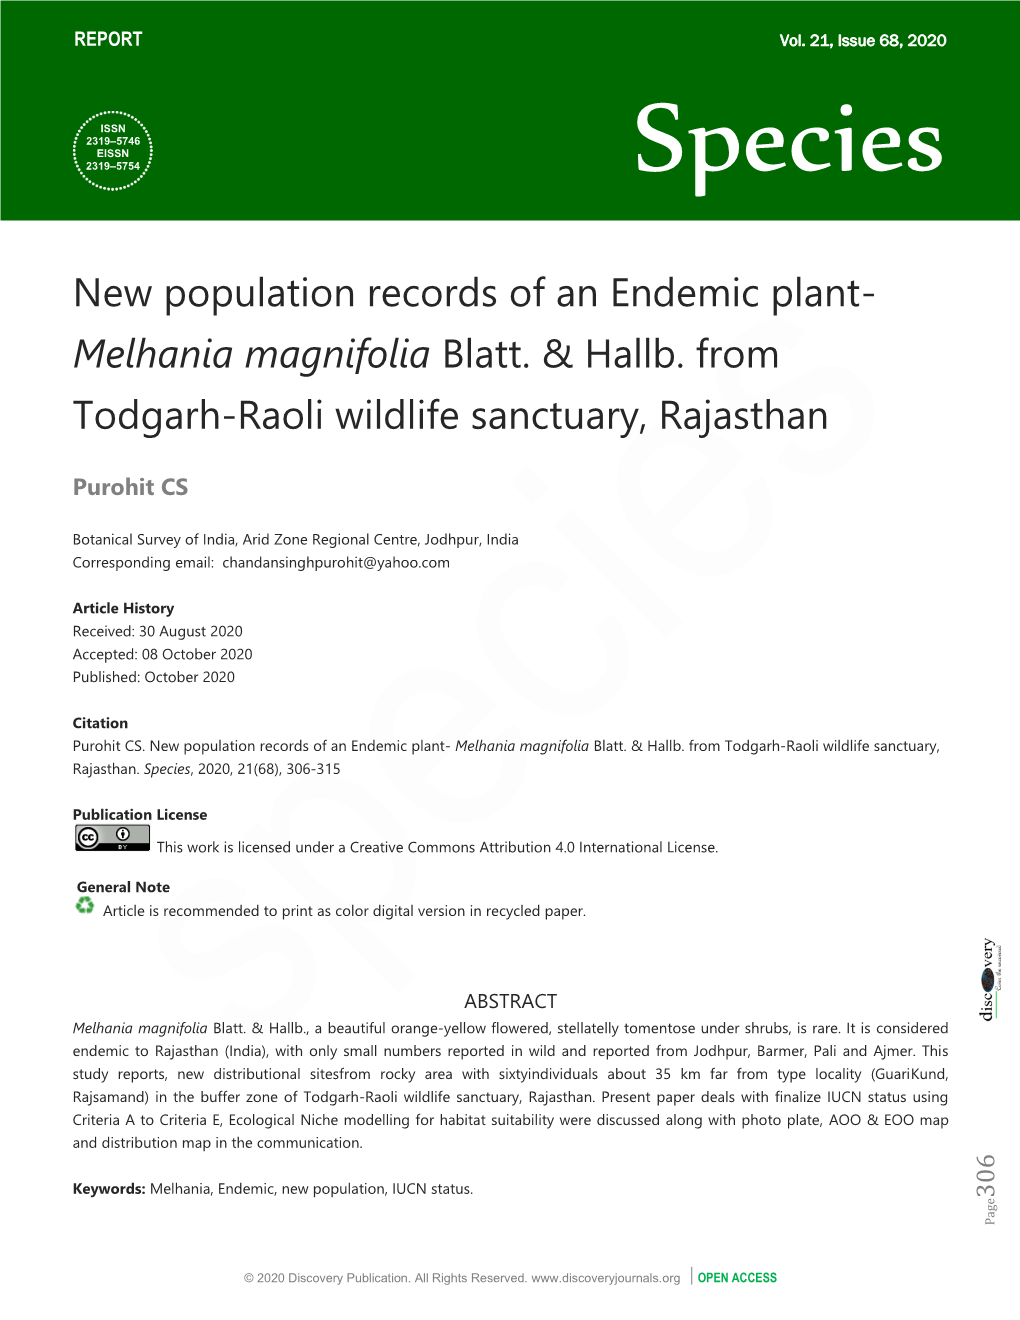 Melhania Magnifolia Blatt. & Hallb. from Todgarh-Raoli Wildlife